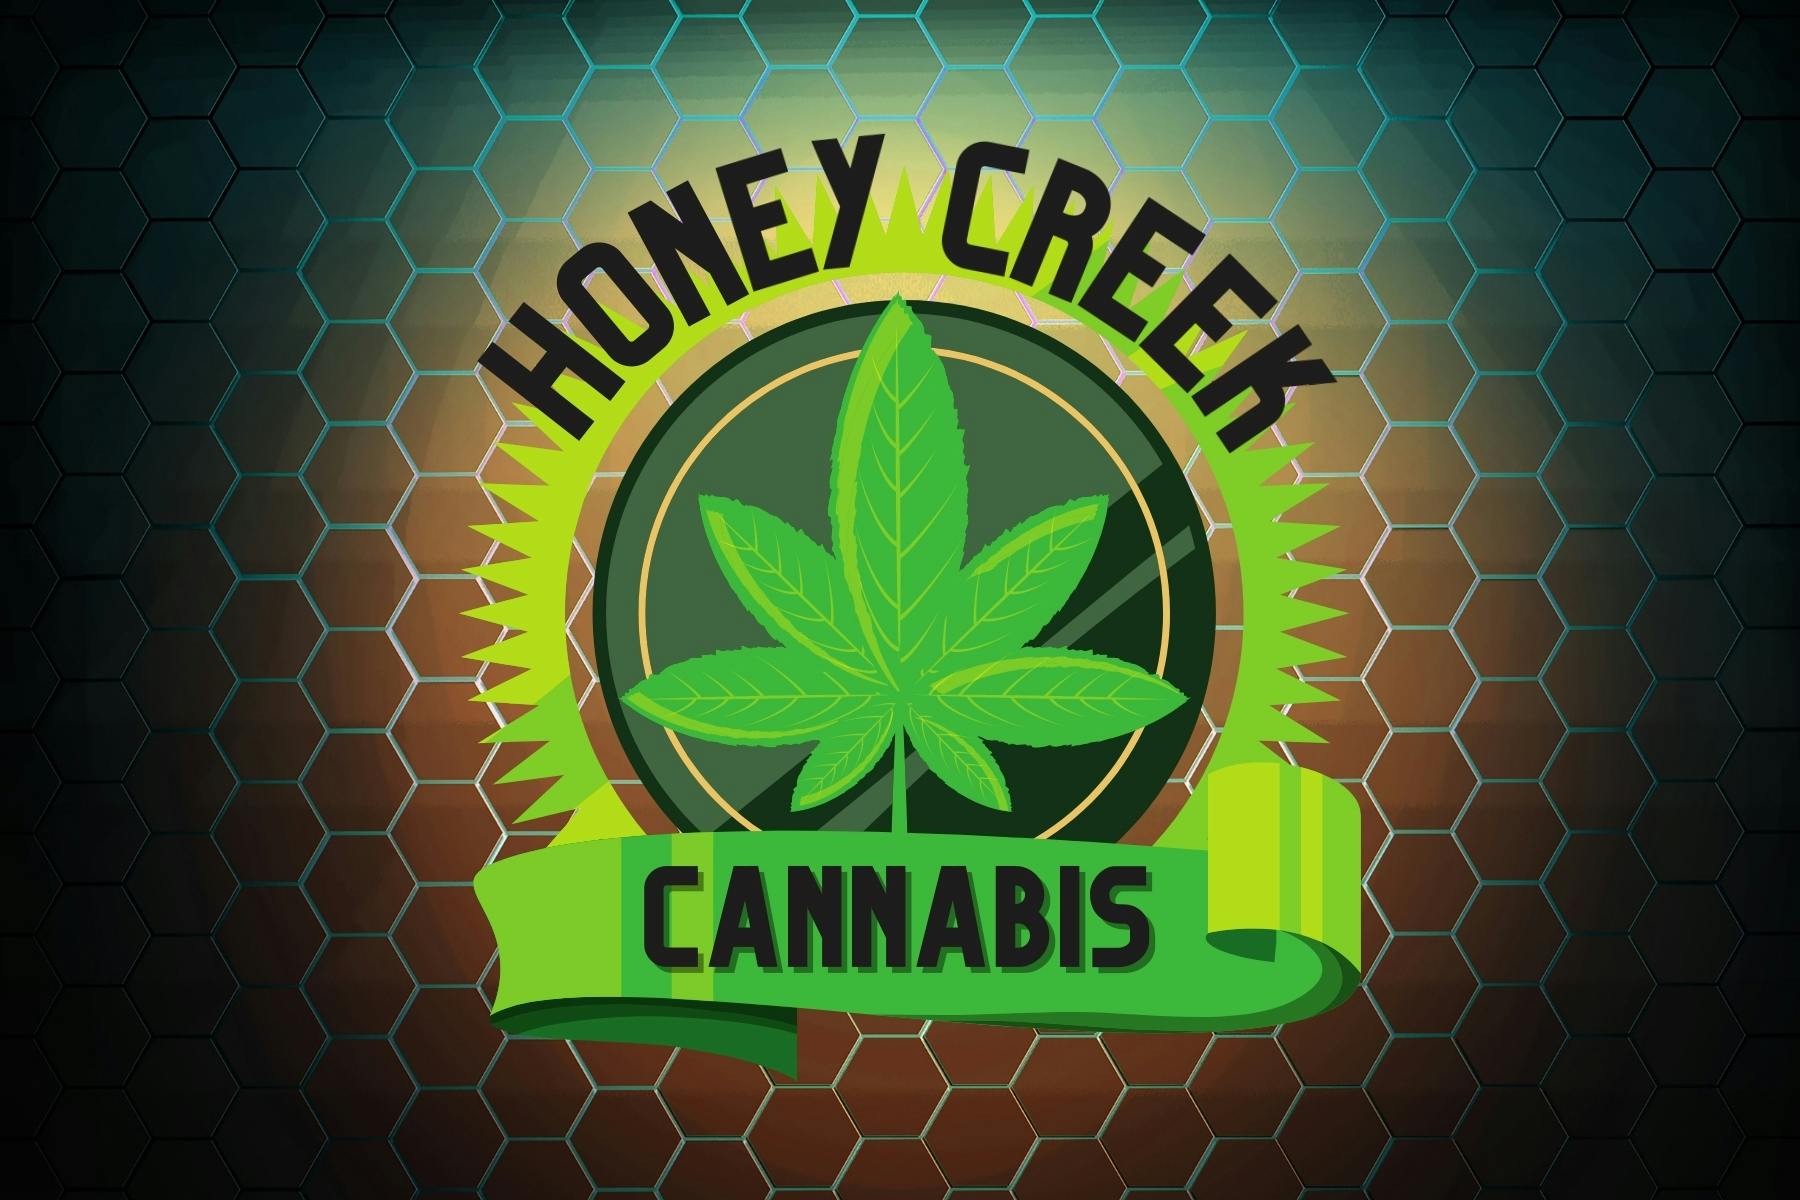 Honey Creek Cannabis logo